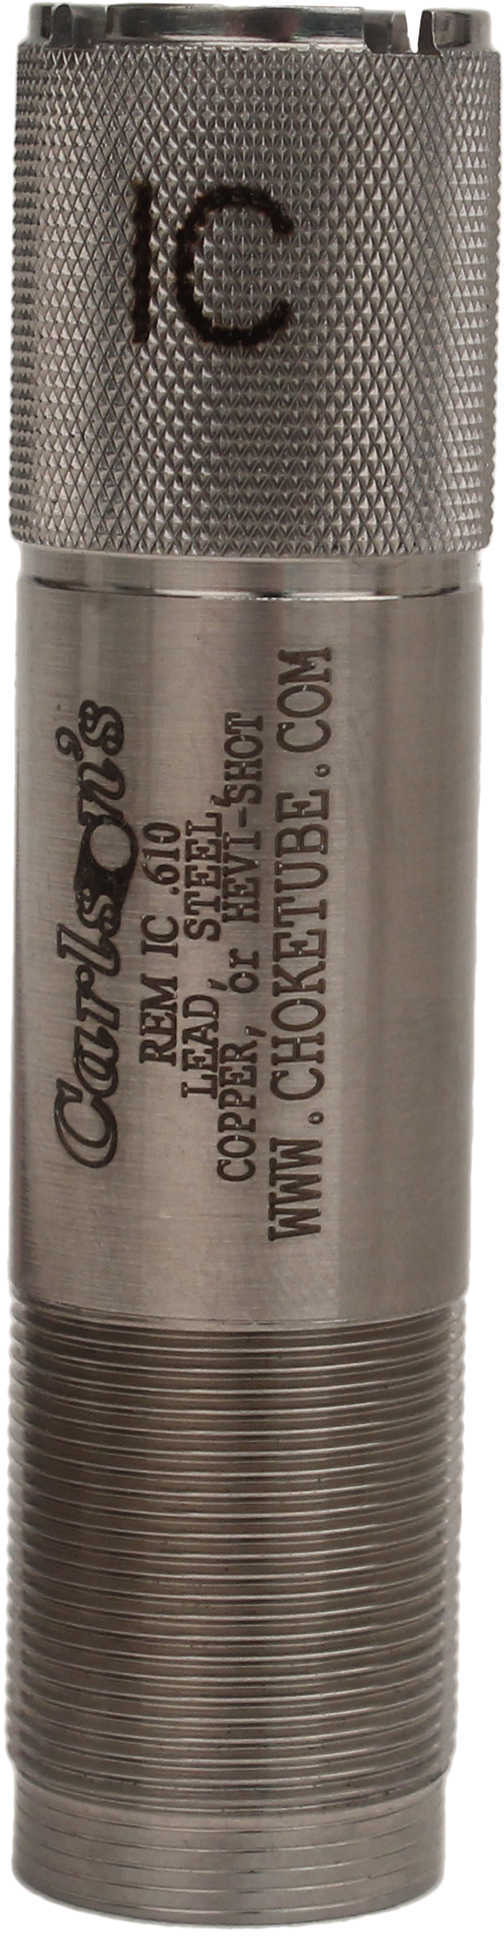 Carlsons Remington Sporting Clay Choke Tubes 20 Gauge Improved Cylinder .610 13373